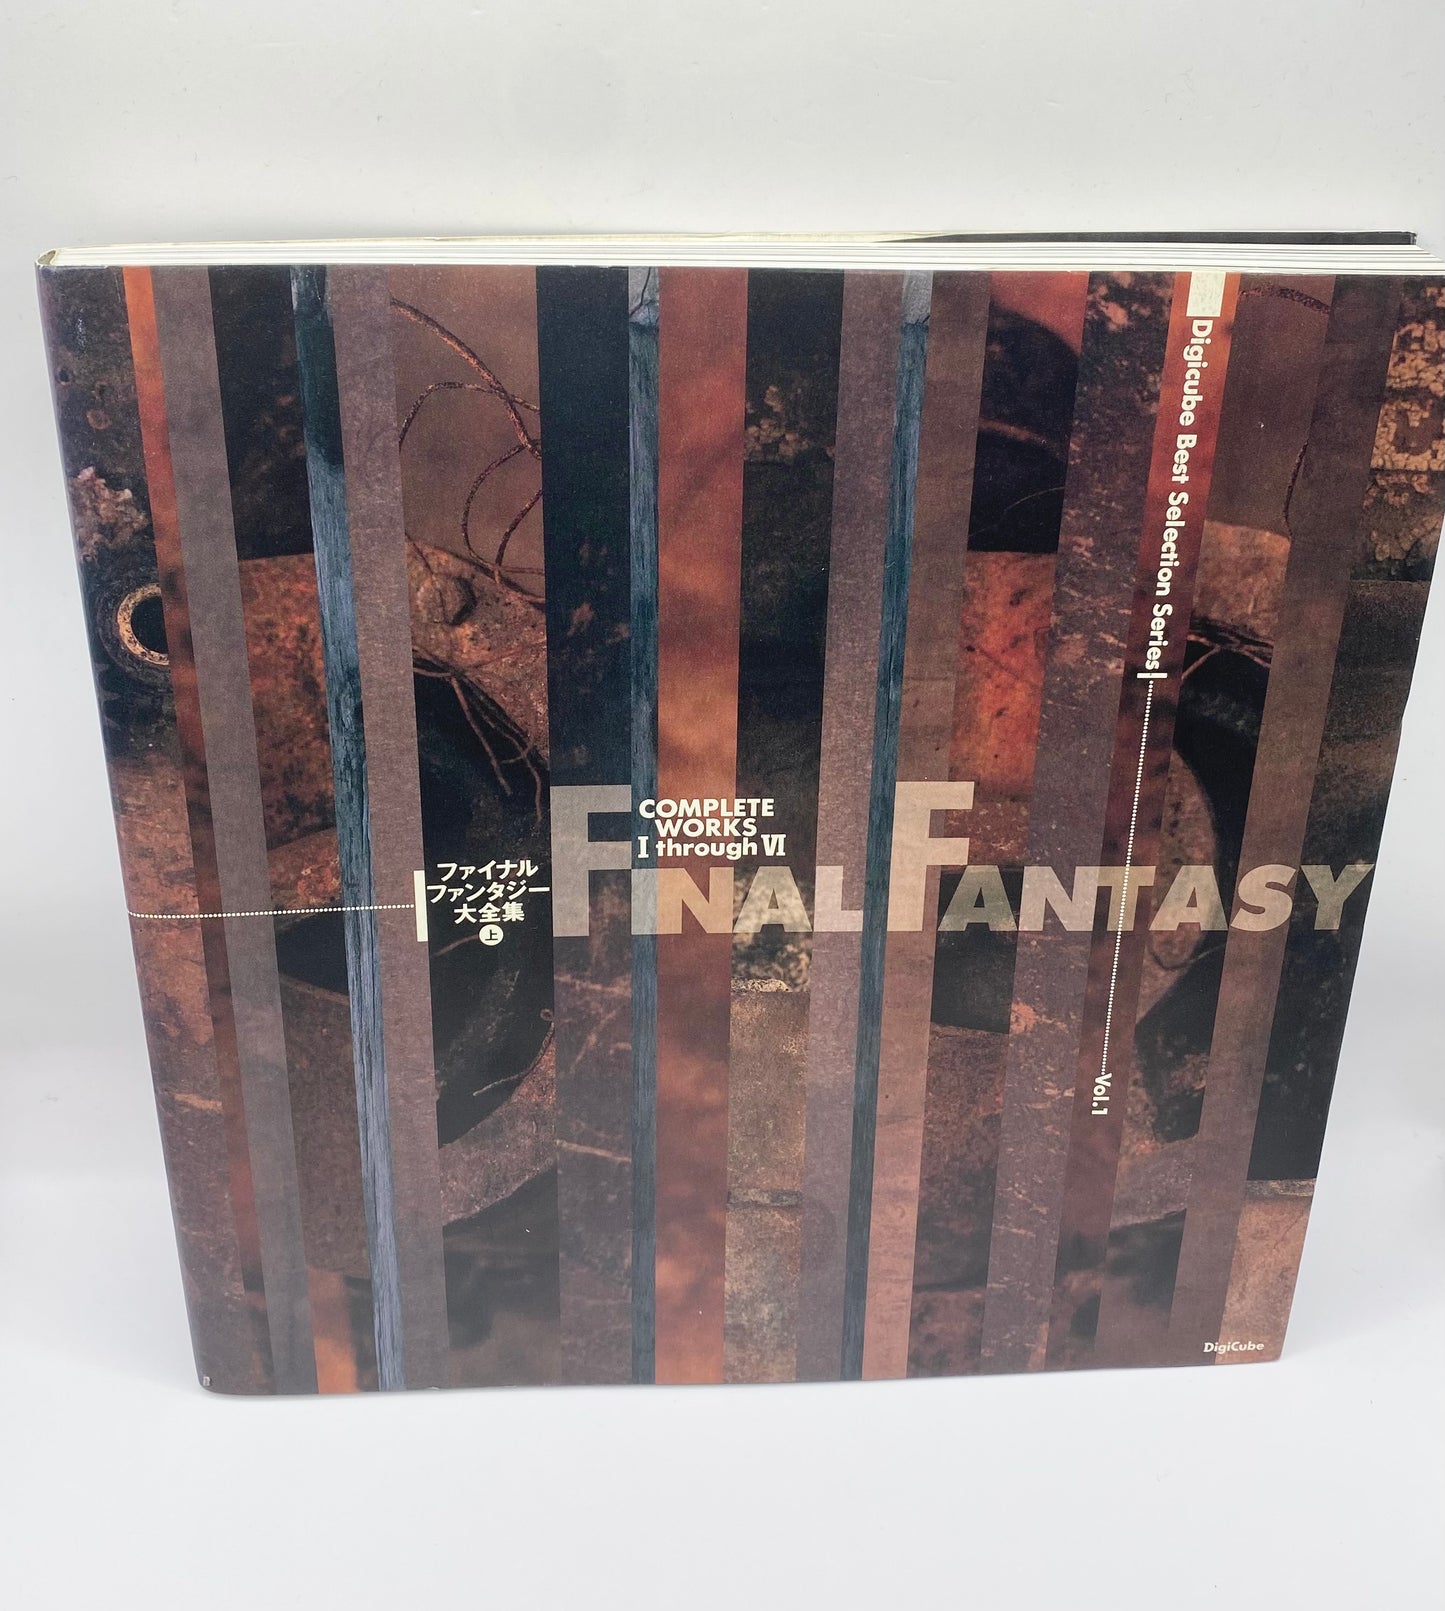 BOOK Final Fantasy - Encyclopaedia Complete Works I Through VI Vol 1